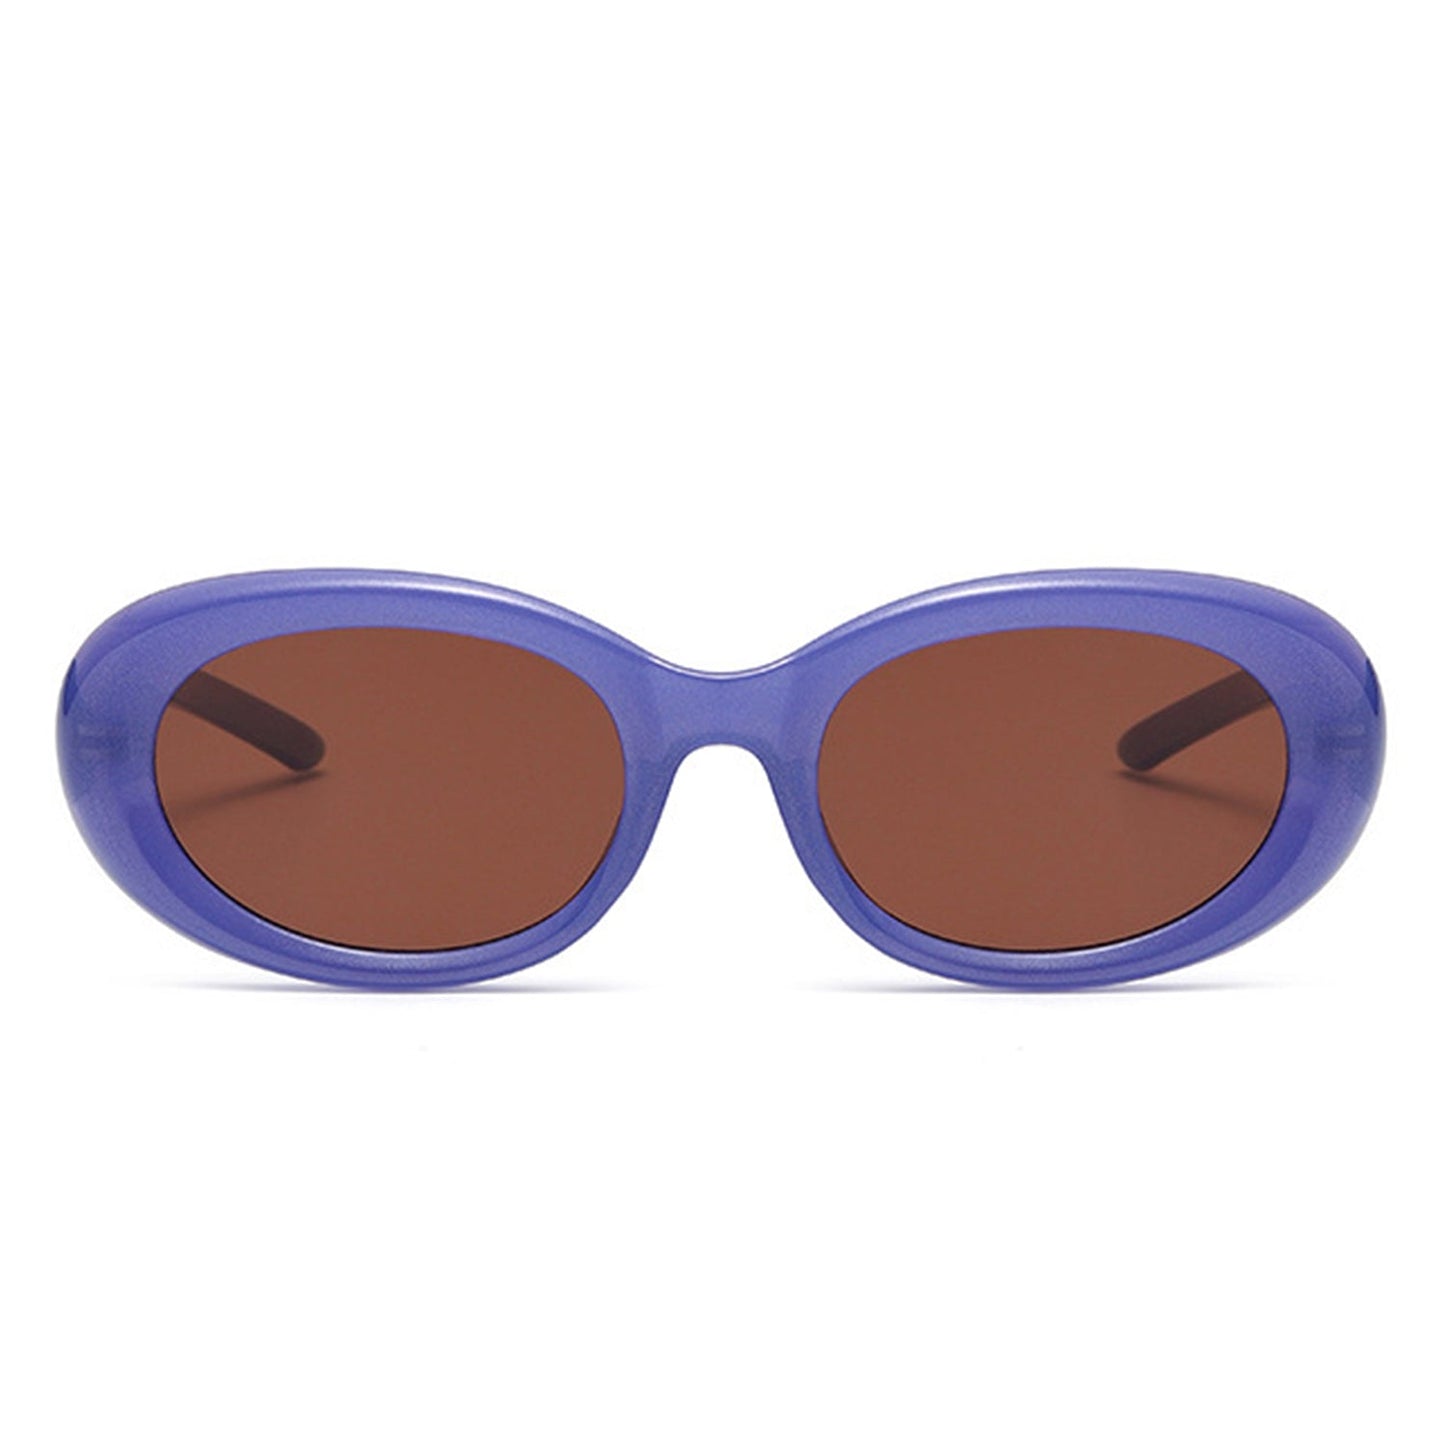 Mysticor - Oval Retro 90s Round Tinted Clout Goggles Sunglasses - lolaluxeshop